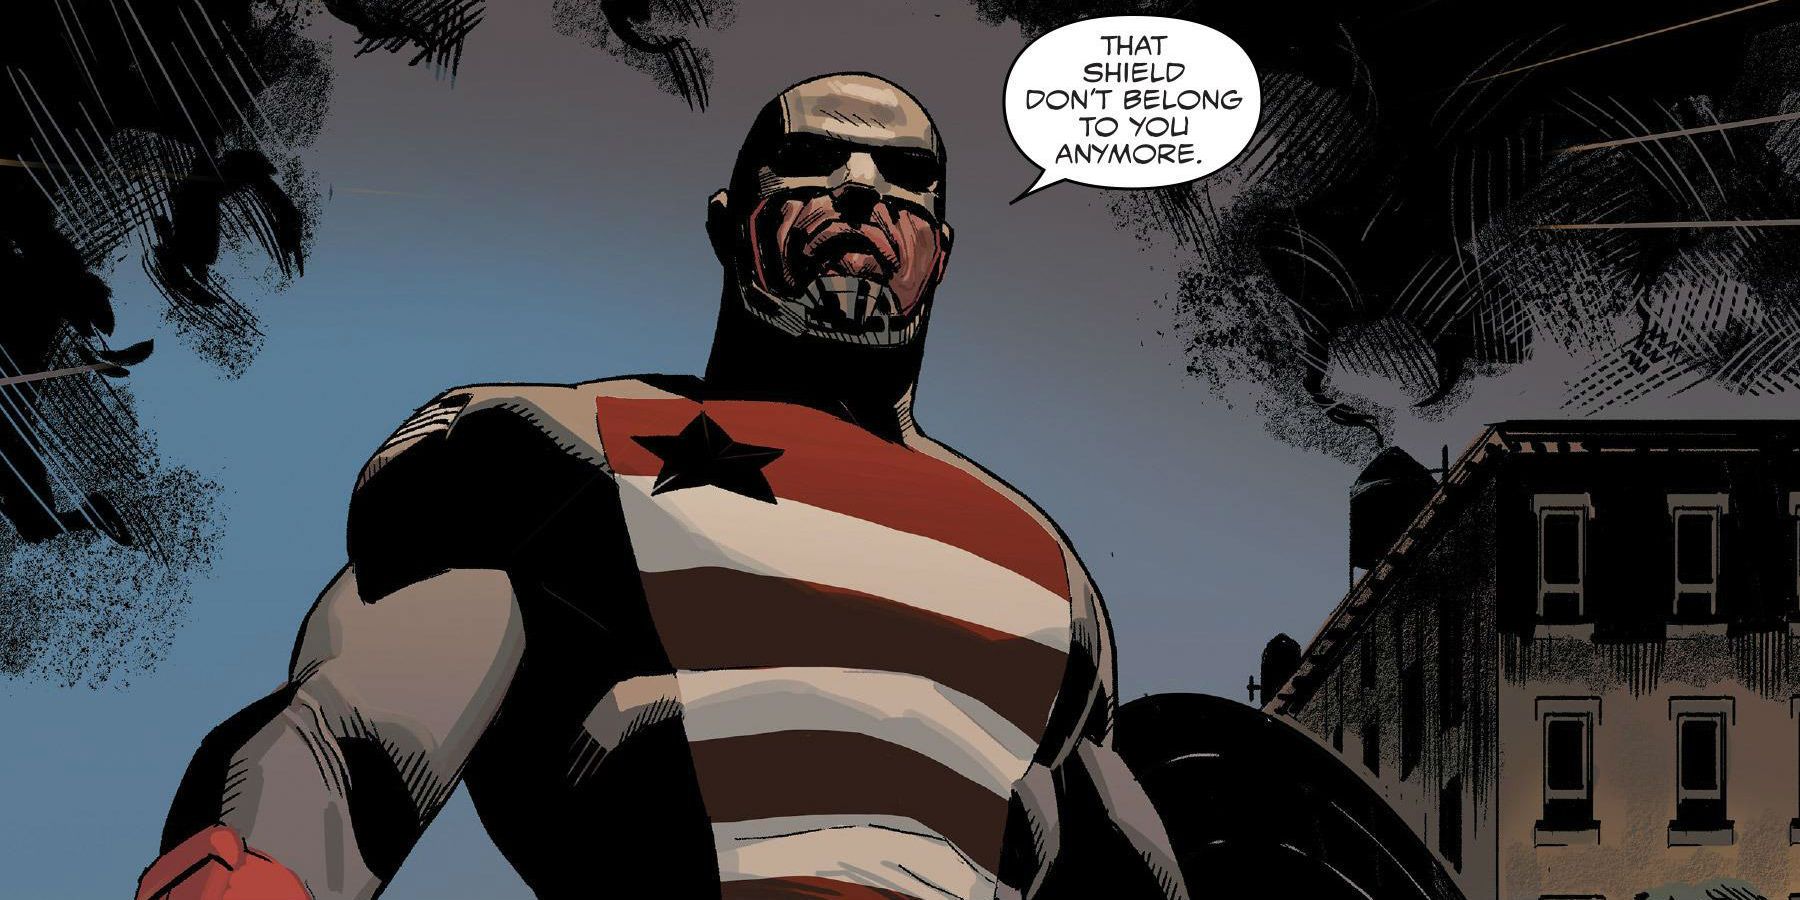 An image of Marvel Comics' USAgent threatening Captain America